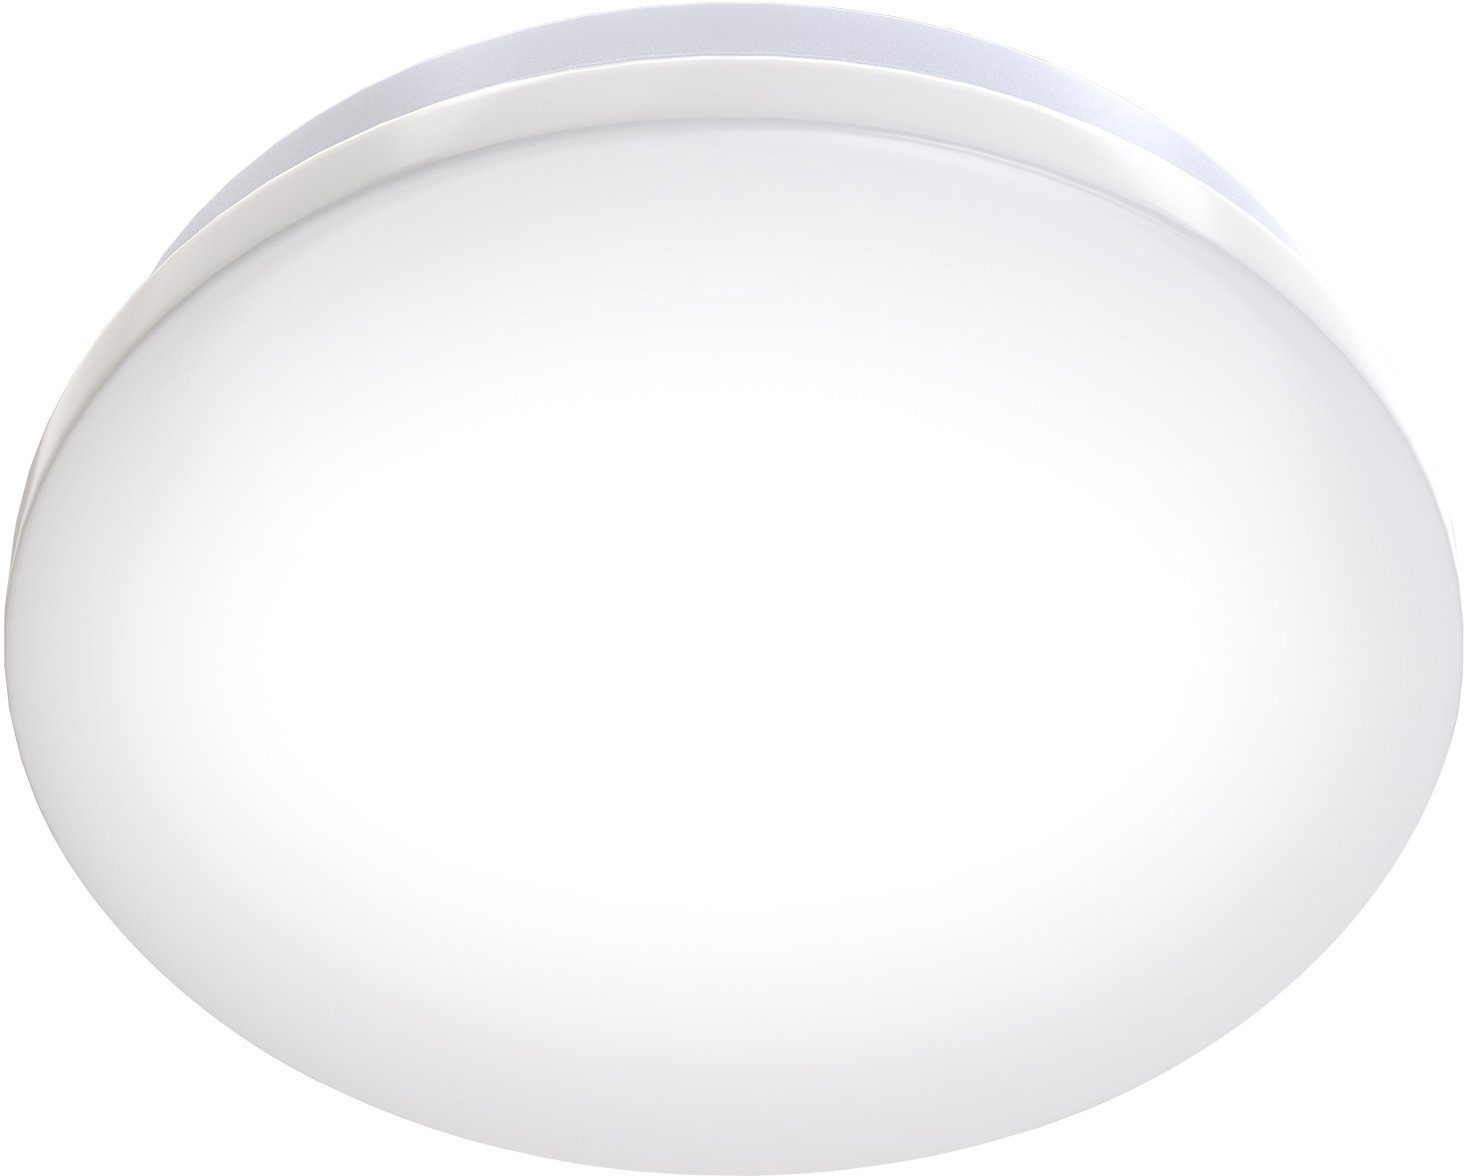 fest weiß Deckenlampe, integriert, 1200lm Neutralweiß, inkl. 12 Deckenleuchte, flach, Bad, B.K.Licht LED 4000K, LED LED Watt Modul